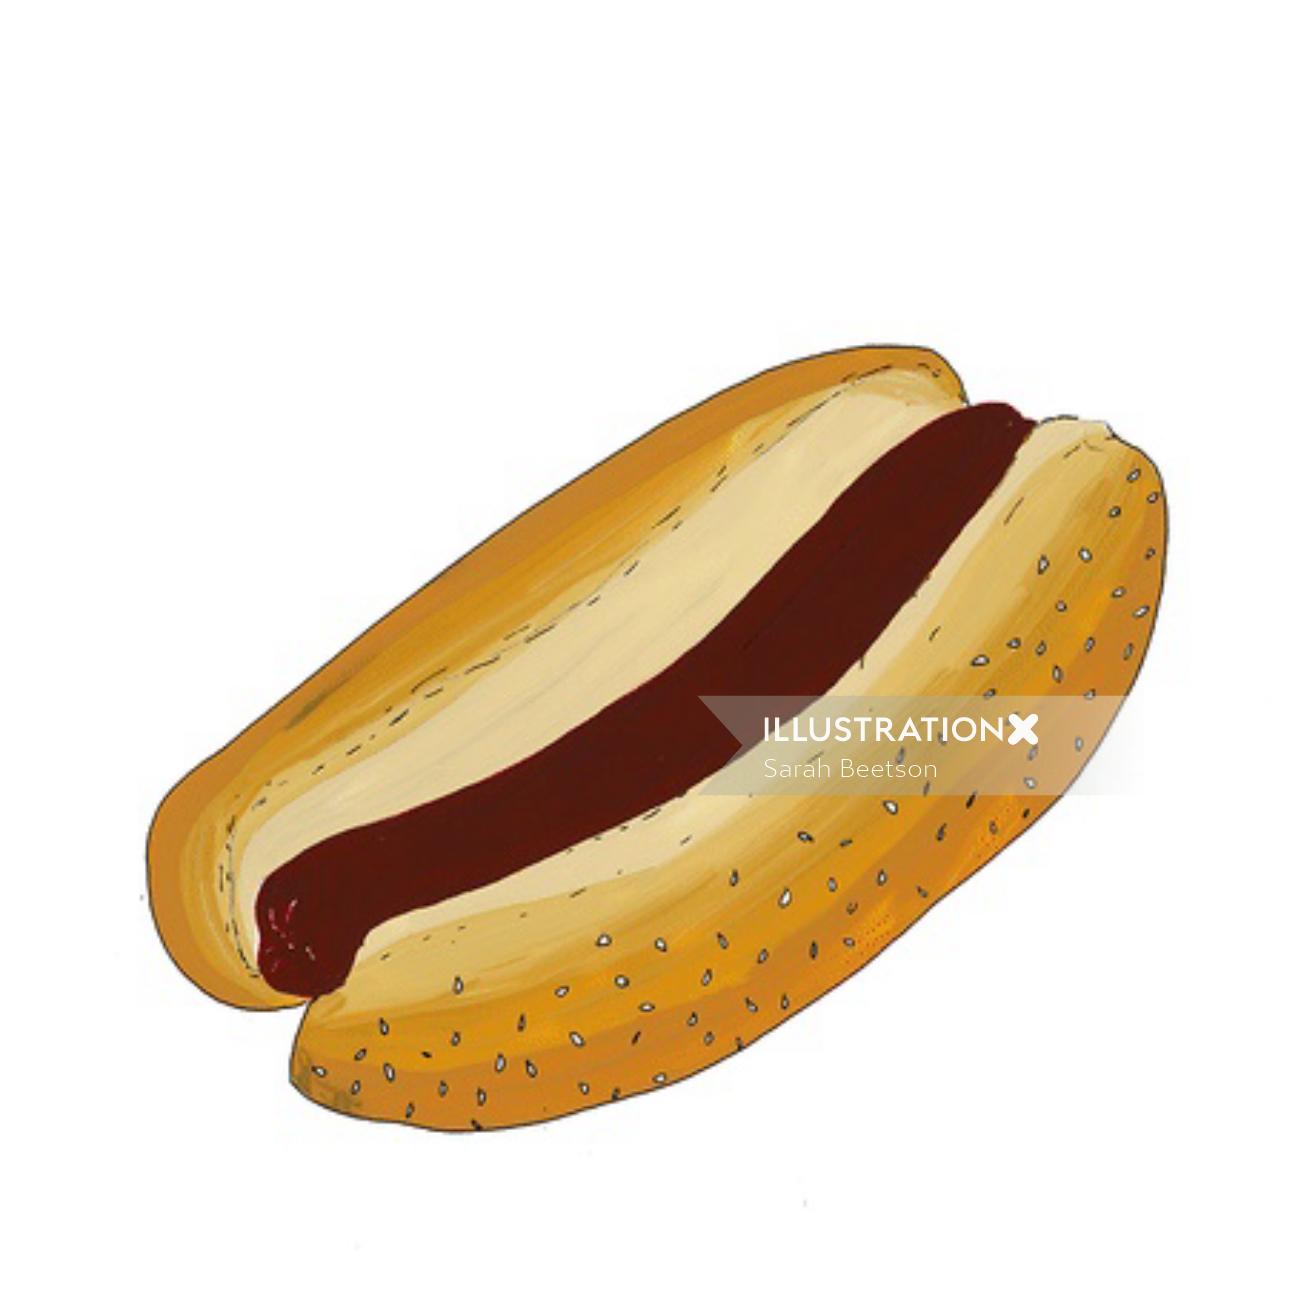 Animation de Hotdog avec sauce